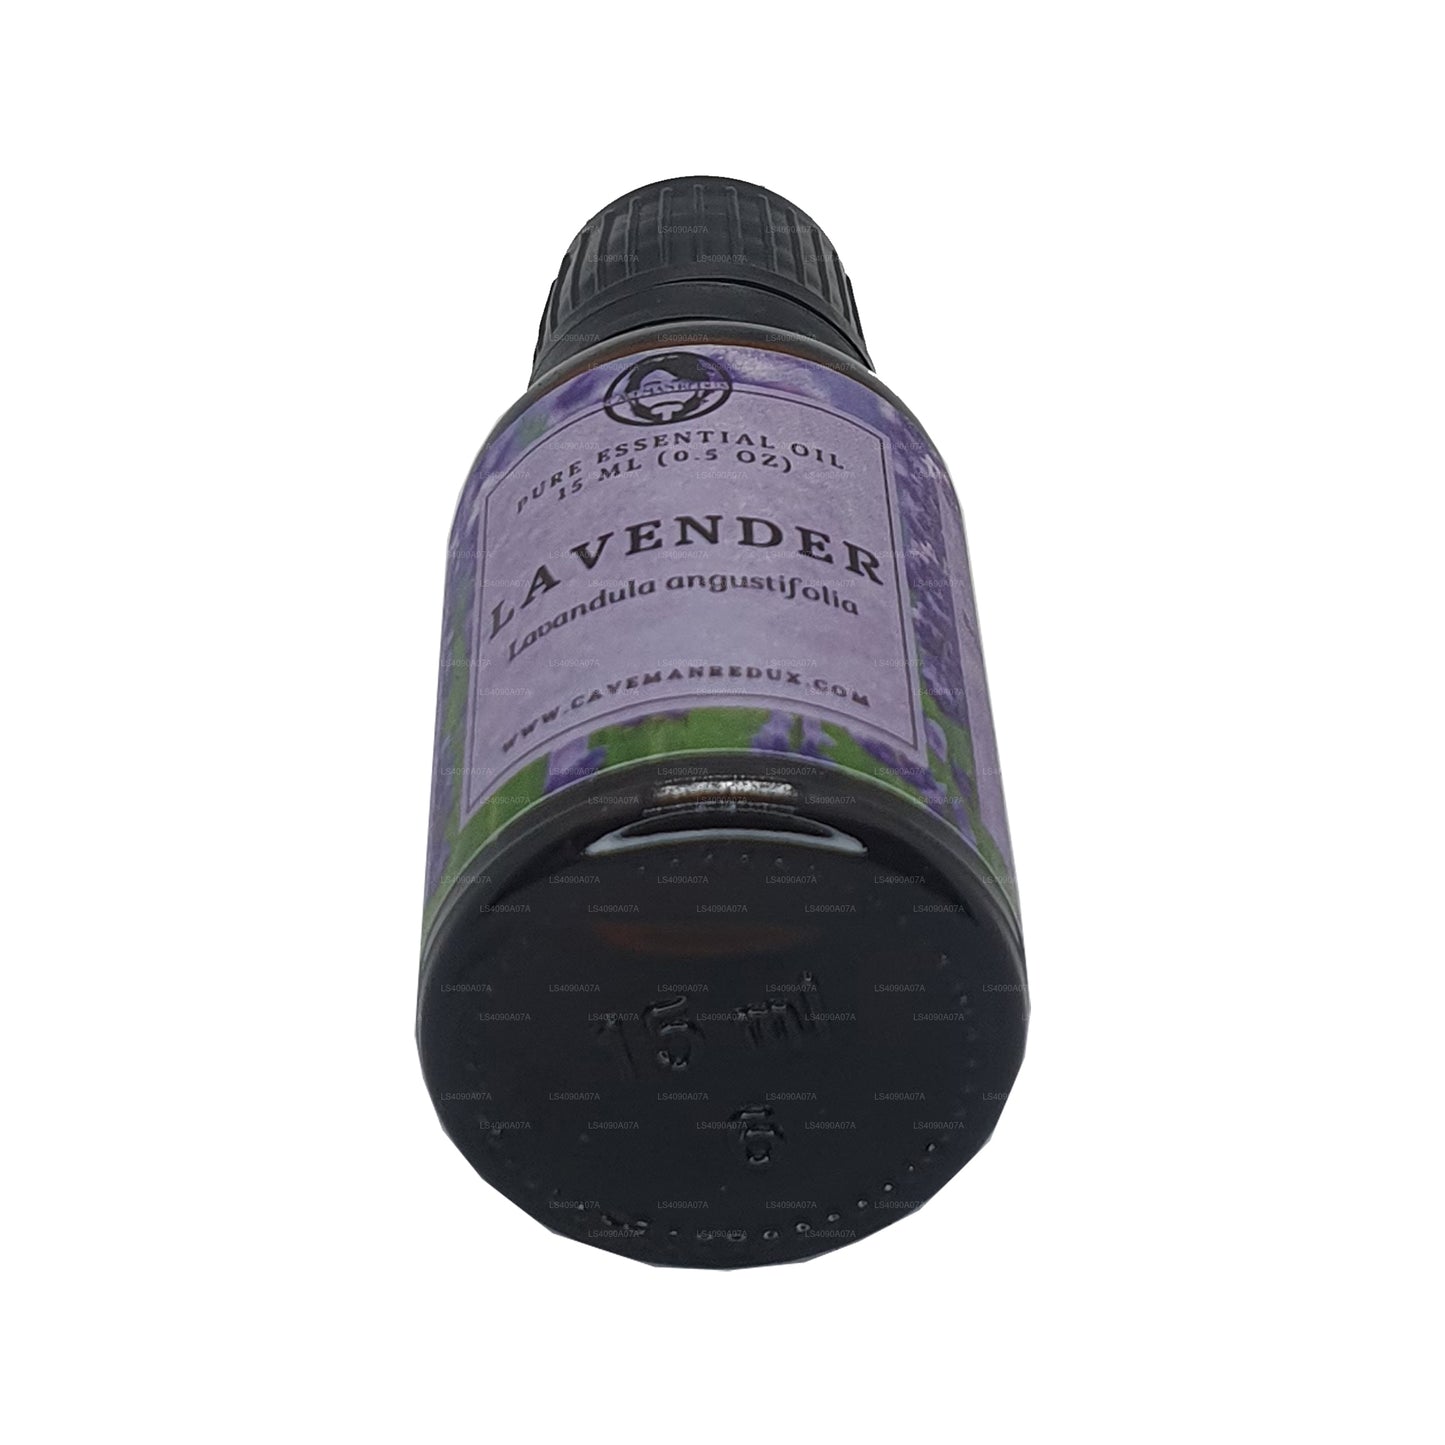 Lakpura etherische olie van lavendels (15 ml)